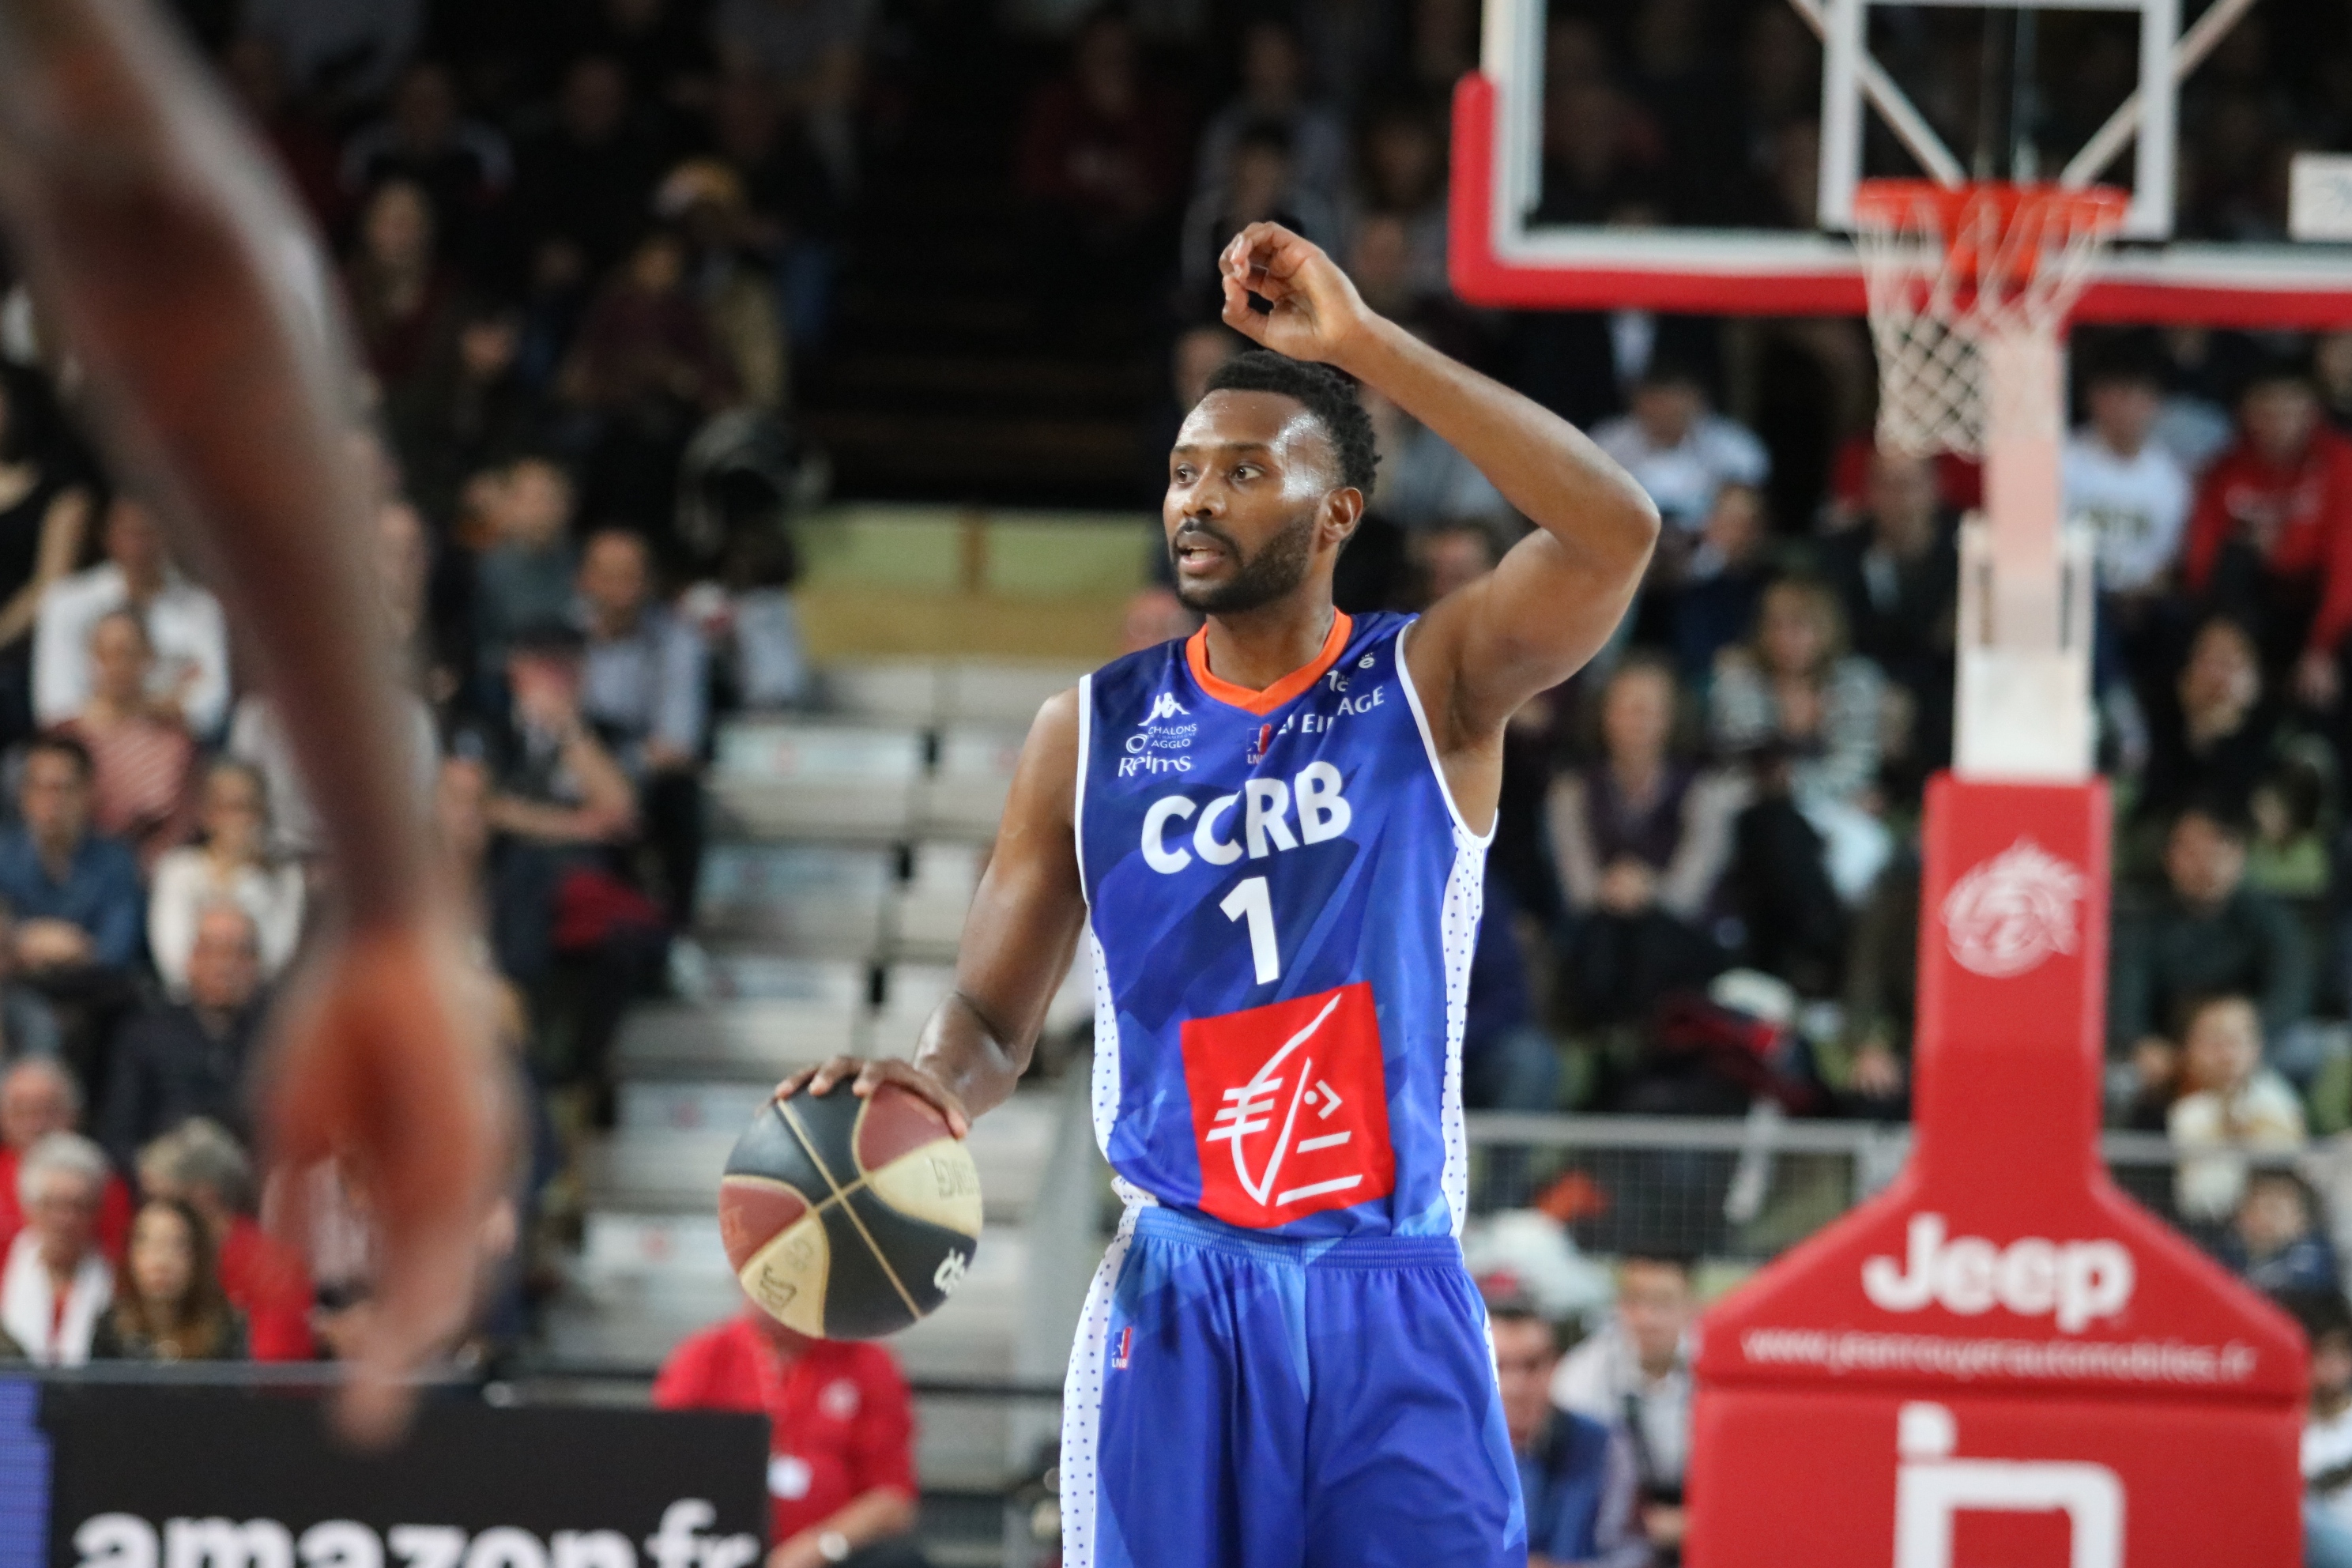 Cholet Basket - Châlons-Reims (06-04-19)